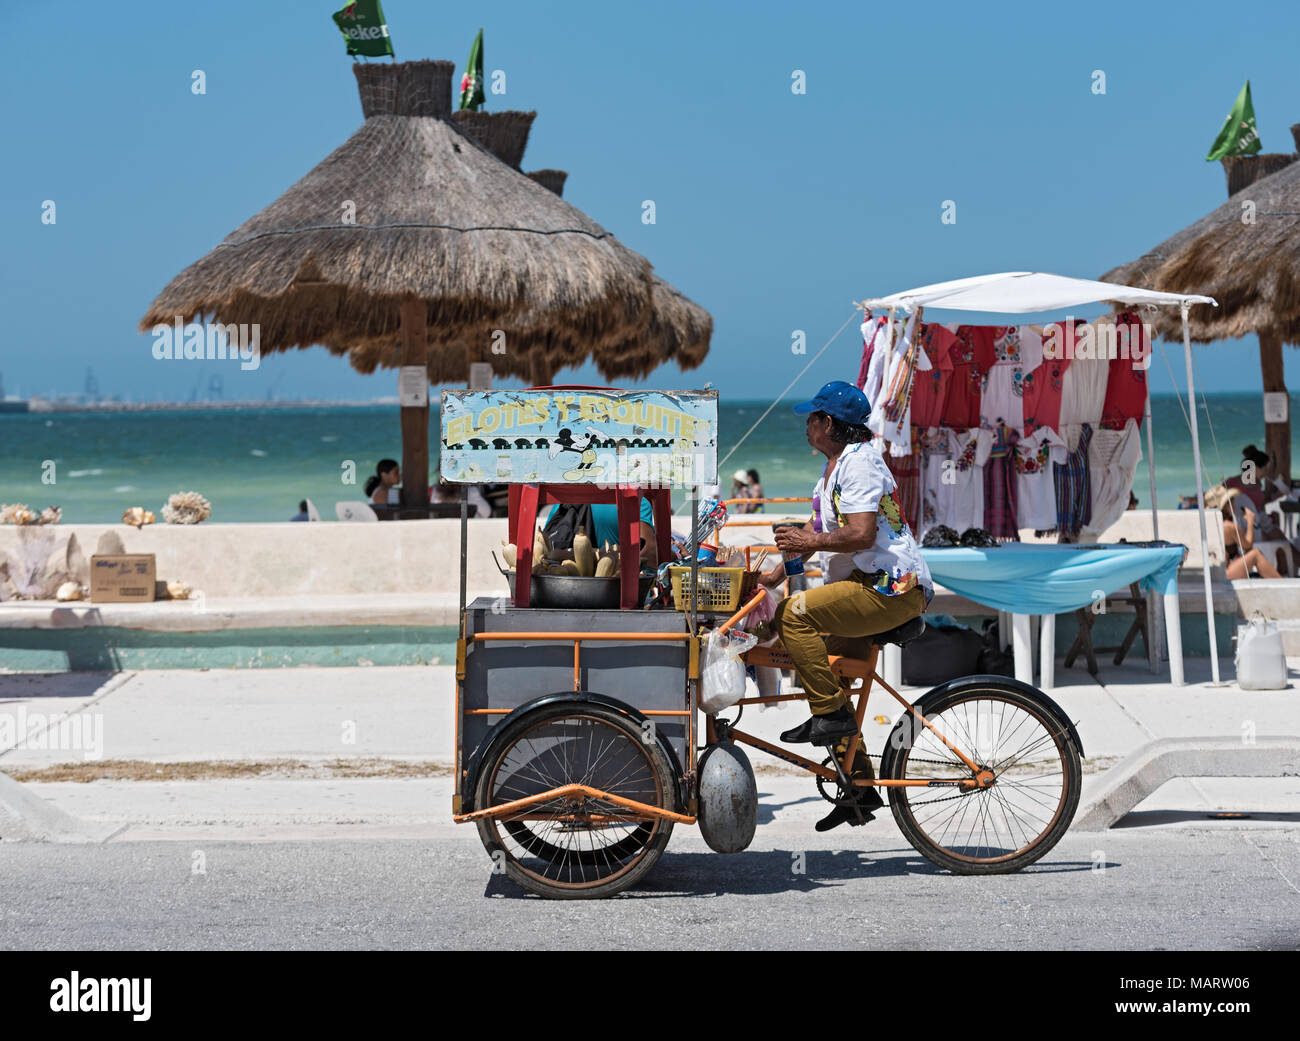 Vendeur de fruits sur un tricycle jaune sur la rue Quay de Progreso, Yucatan, Mexique Banque D'Images